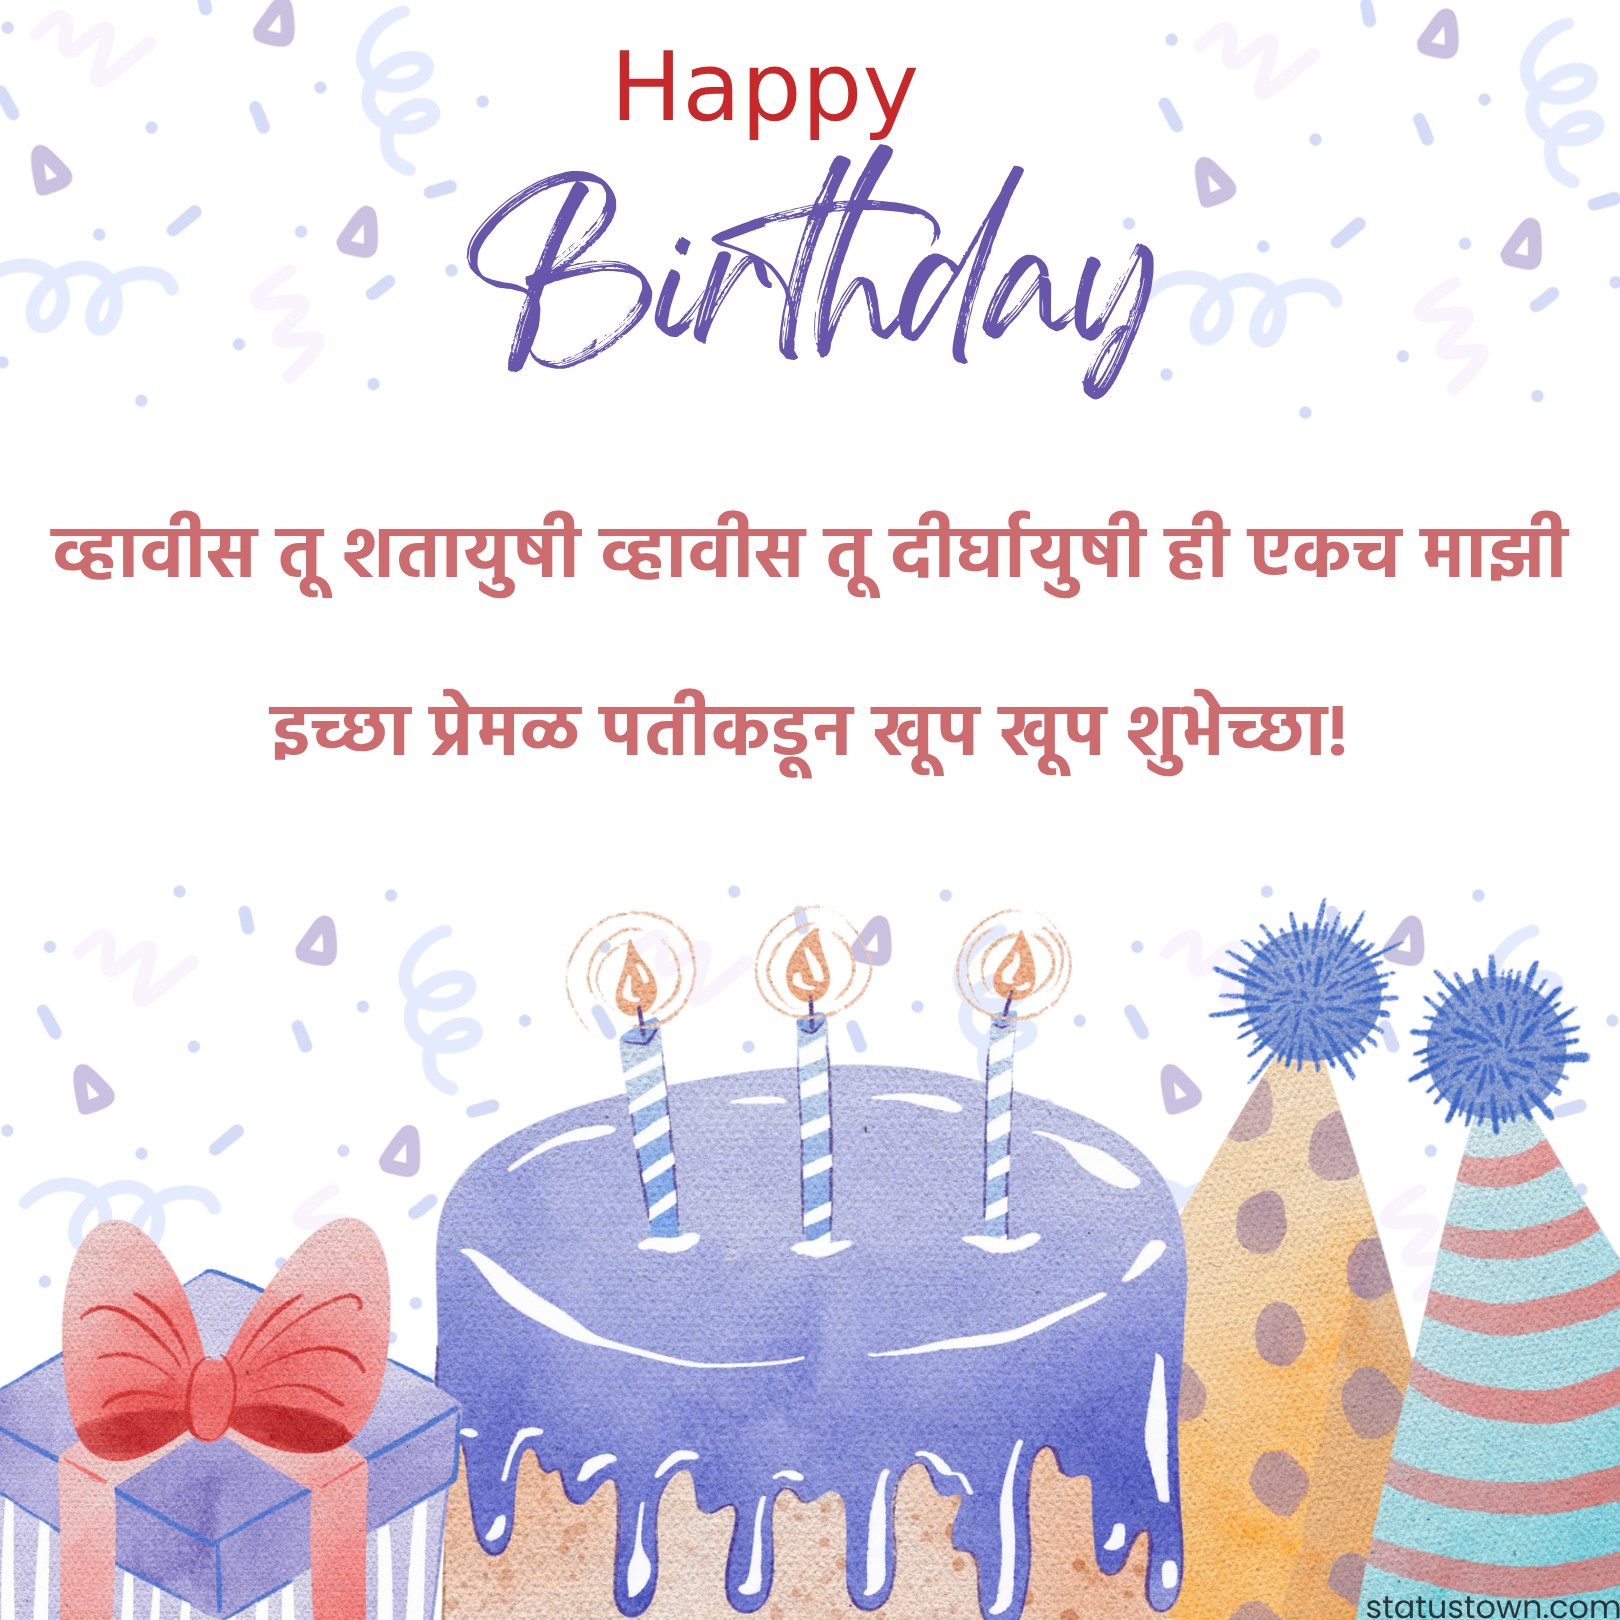 Short birthday wishes for wife in marathi